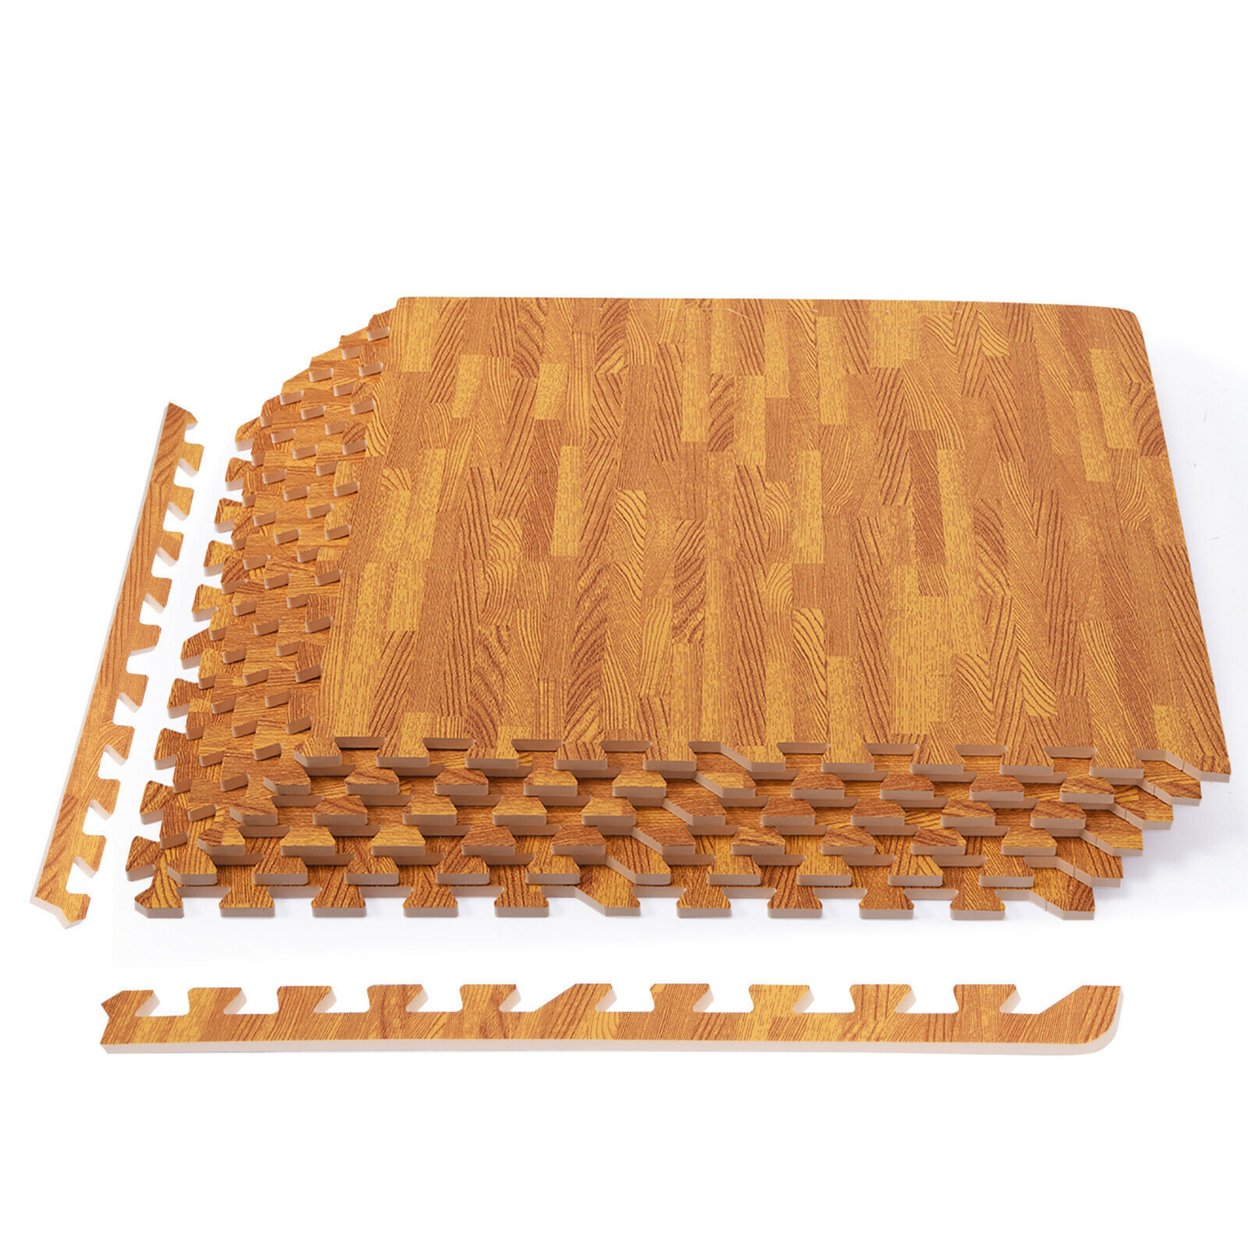 12 Pieces EVA Foam Floor Interlocking Tile Mat W/ Natural Wood Grain